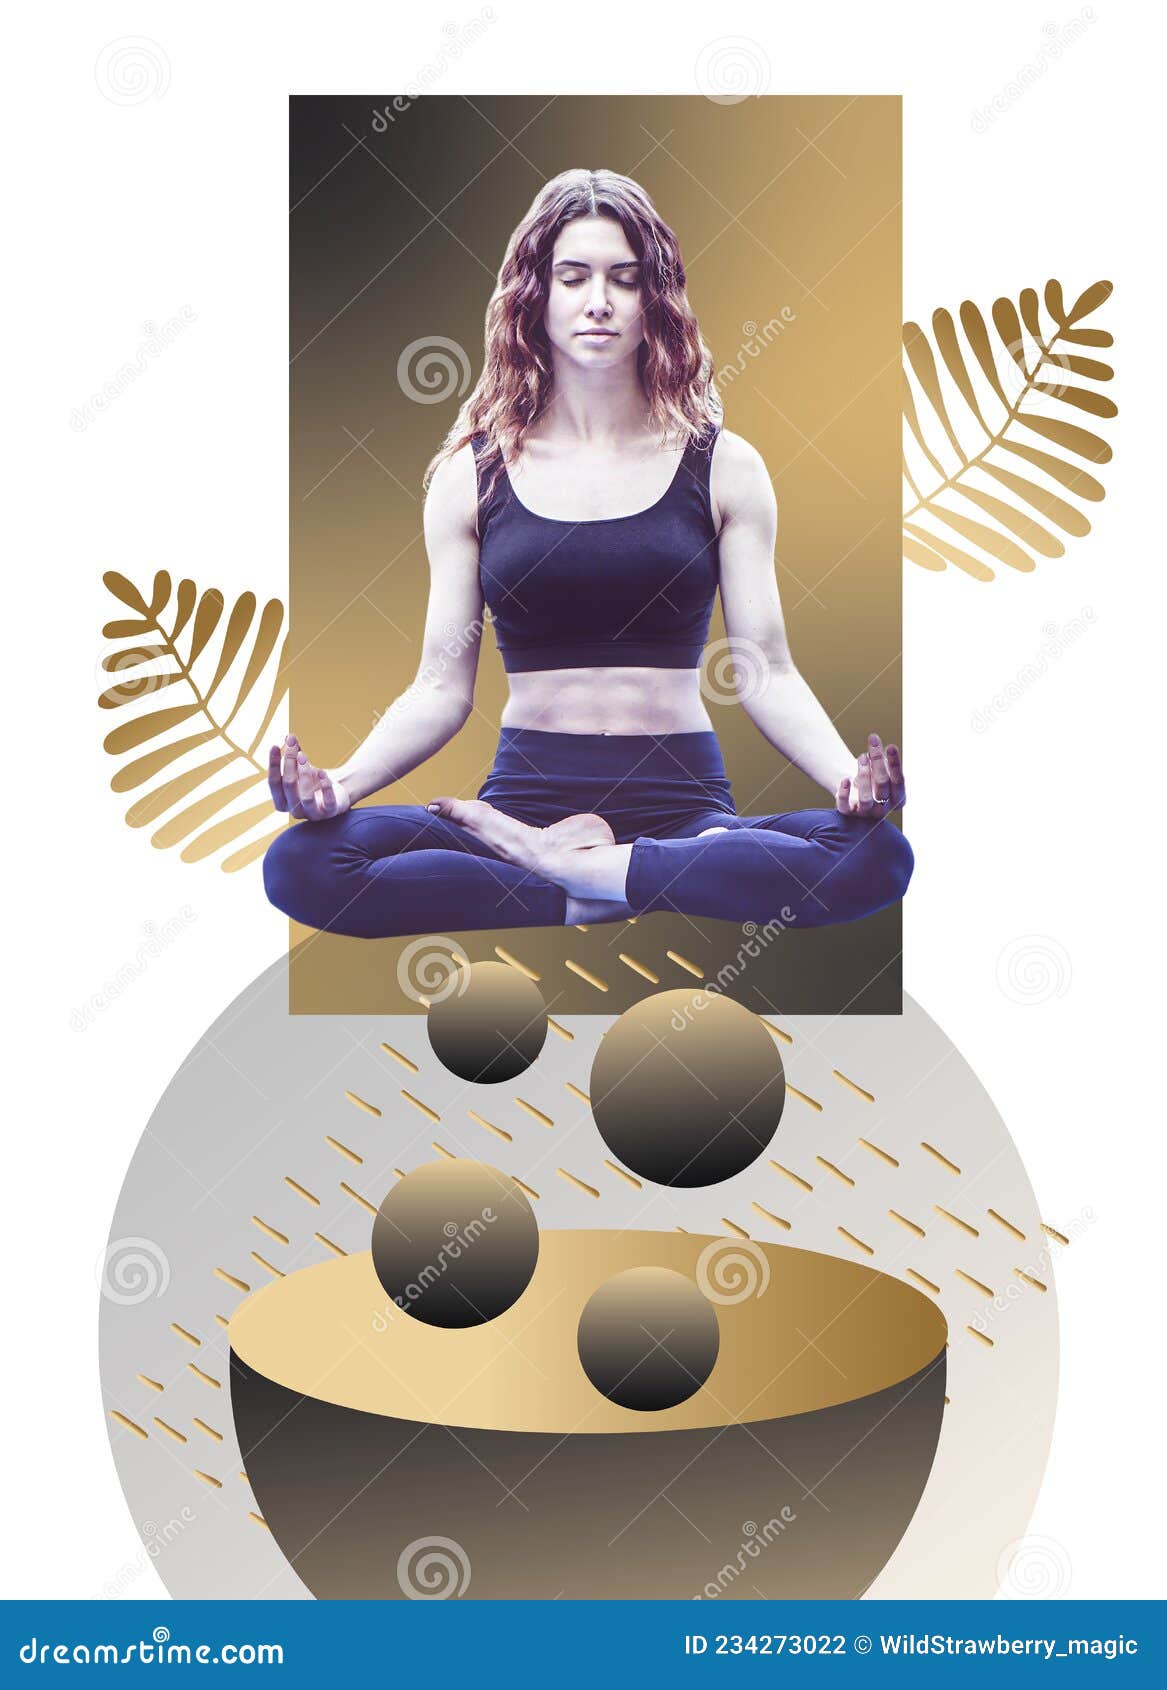 Padmasana (Lotus Pose) | Session 38 (English) | Yoga With Parisa - YouTube